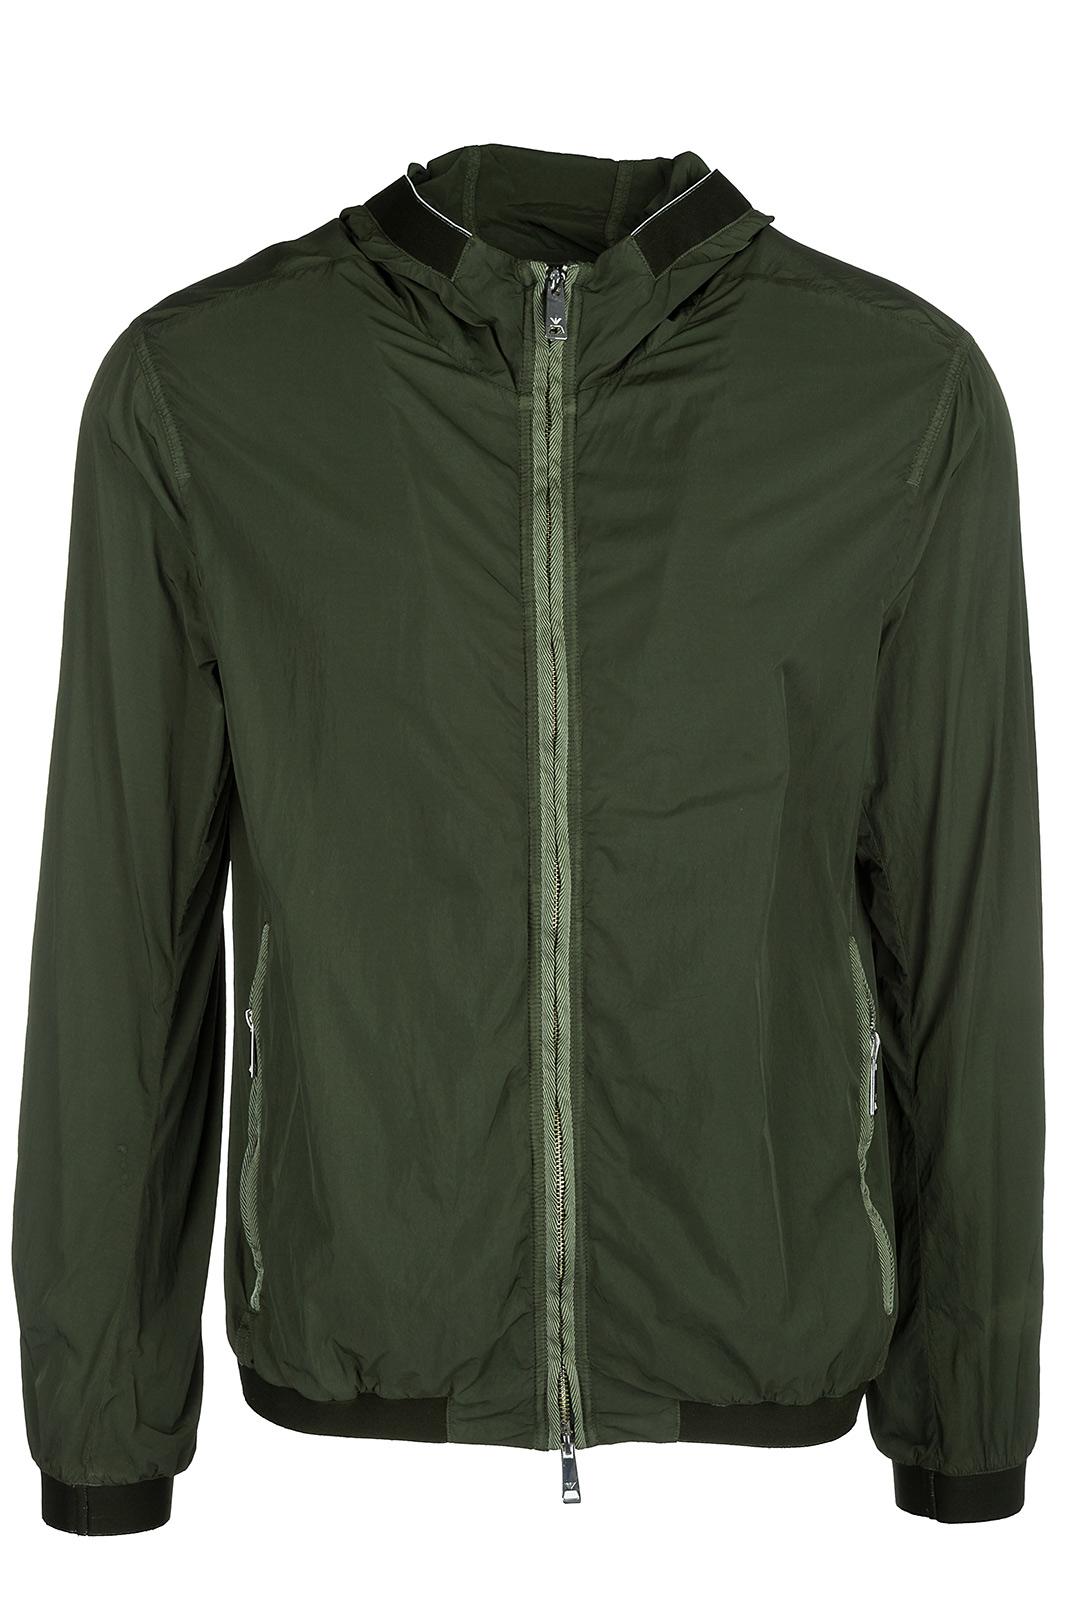 Emporio Armani Men's Outerwear Jacket Blouson In Green | ModeSens